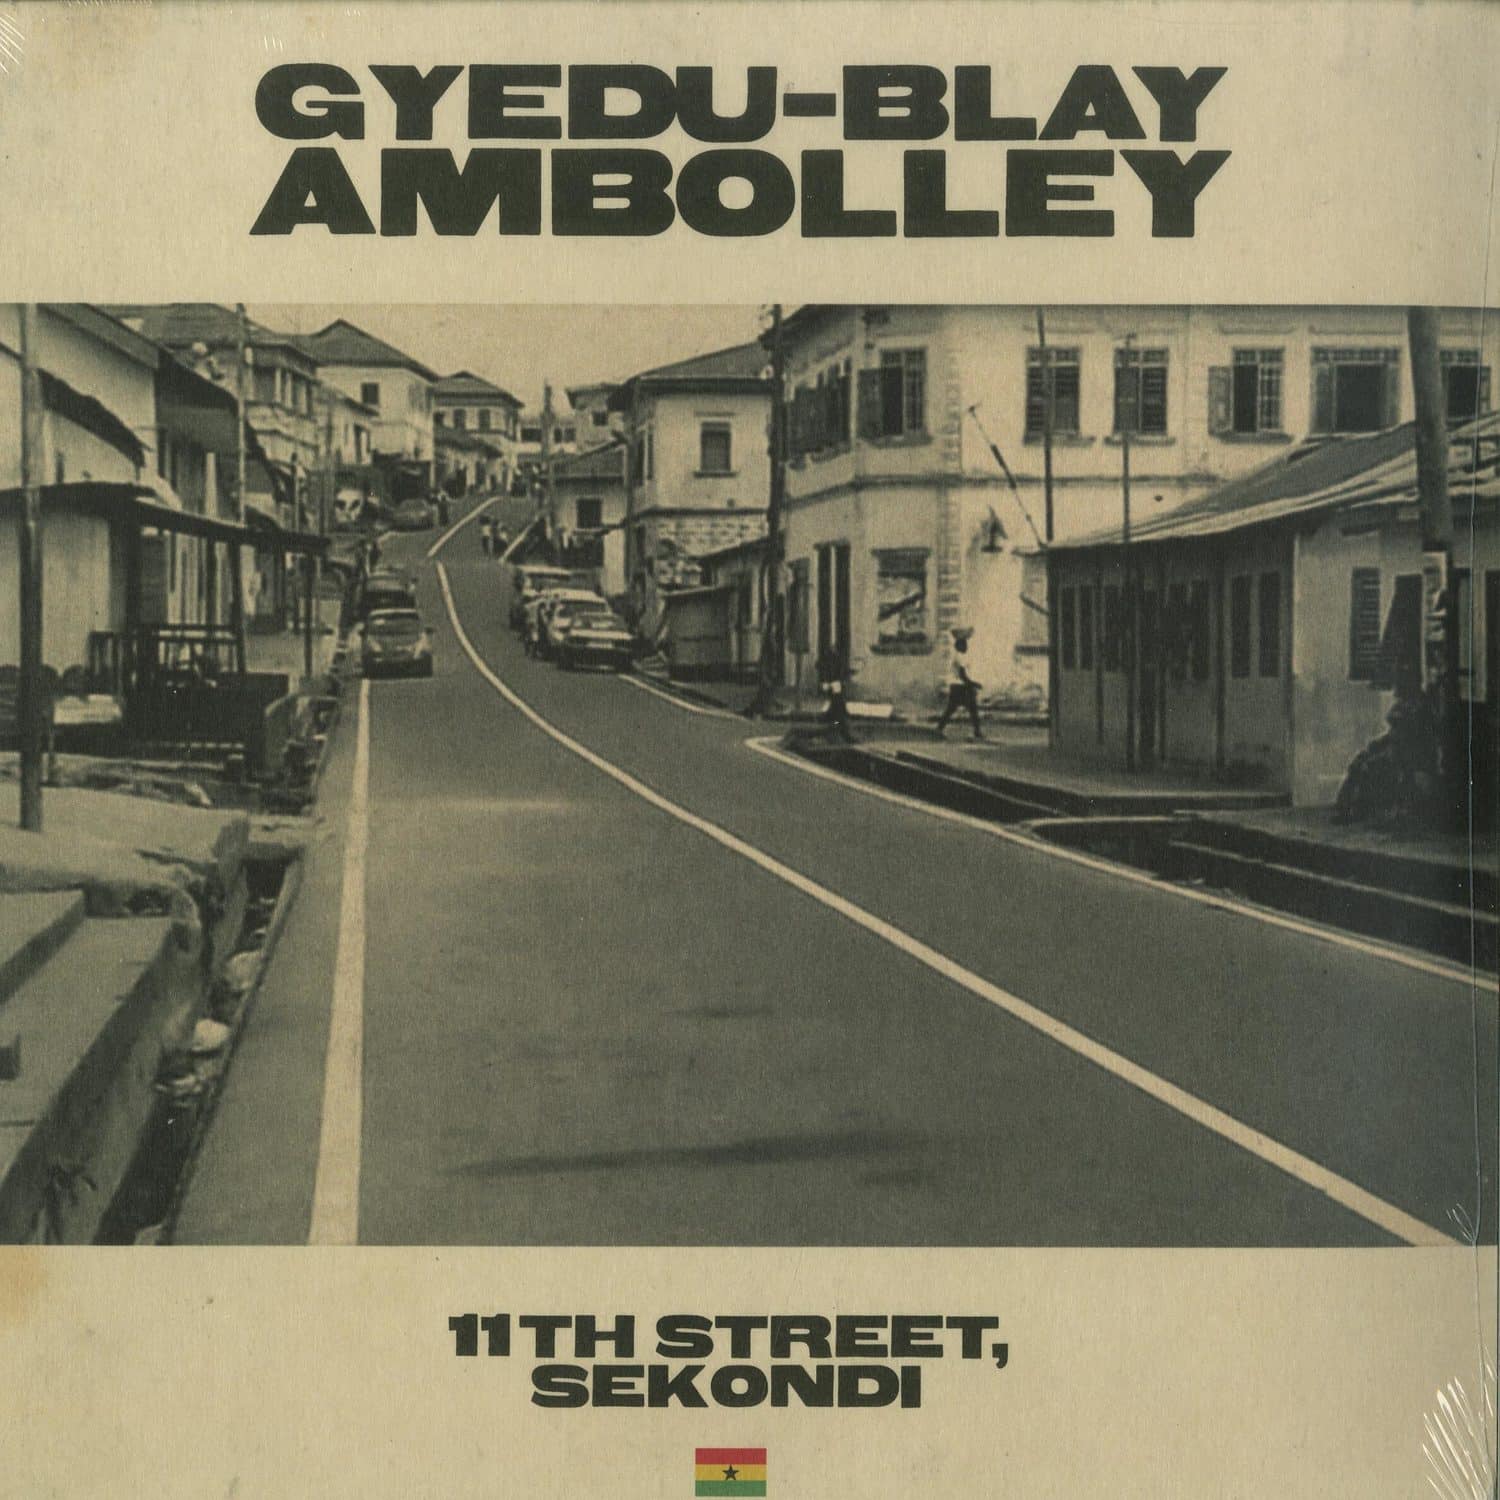 Gyedu-Blay Ambolley - 11TH STREET, SEKONDI 